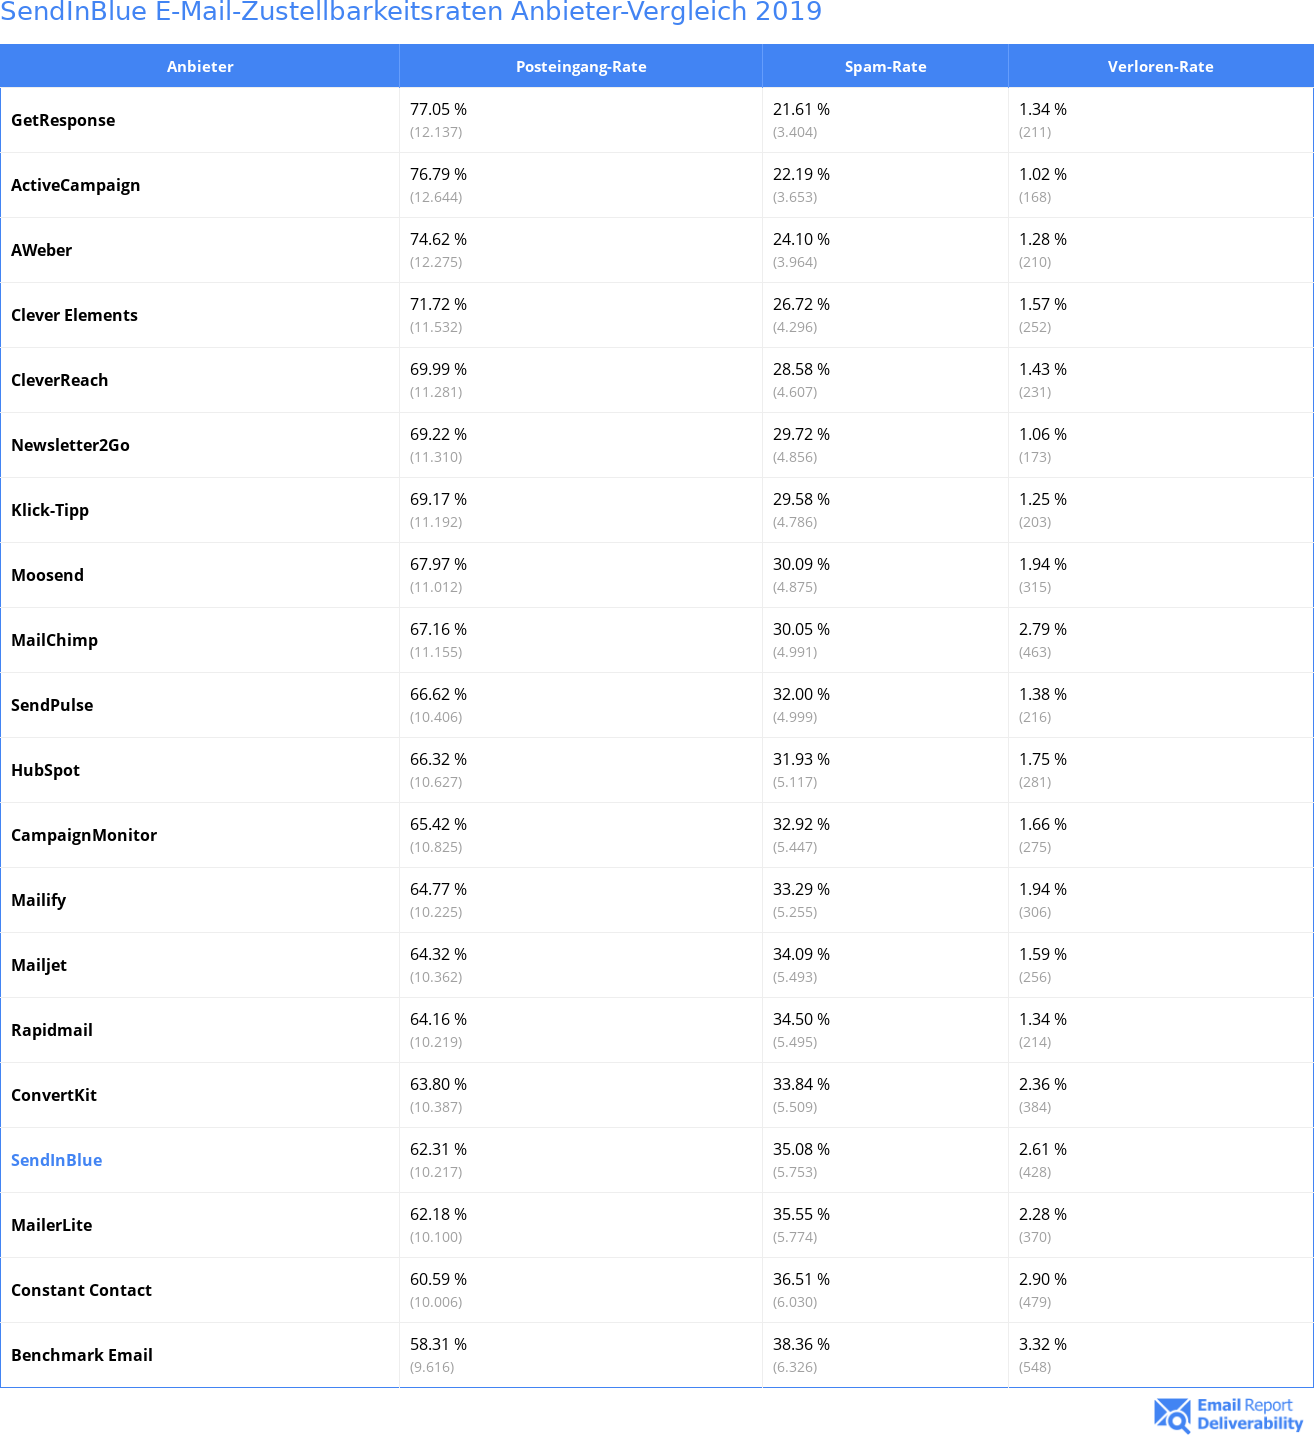 SendInBlue E-Mail-Zustellbarkeitsraten Anbieter-Vergleich 2019